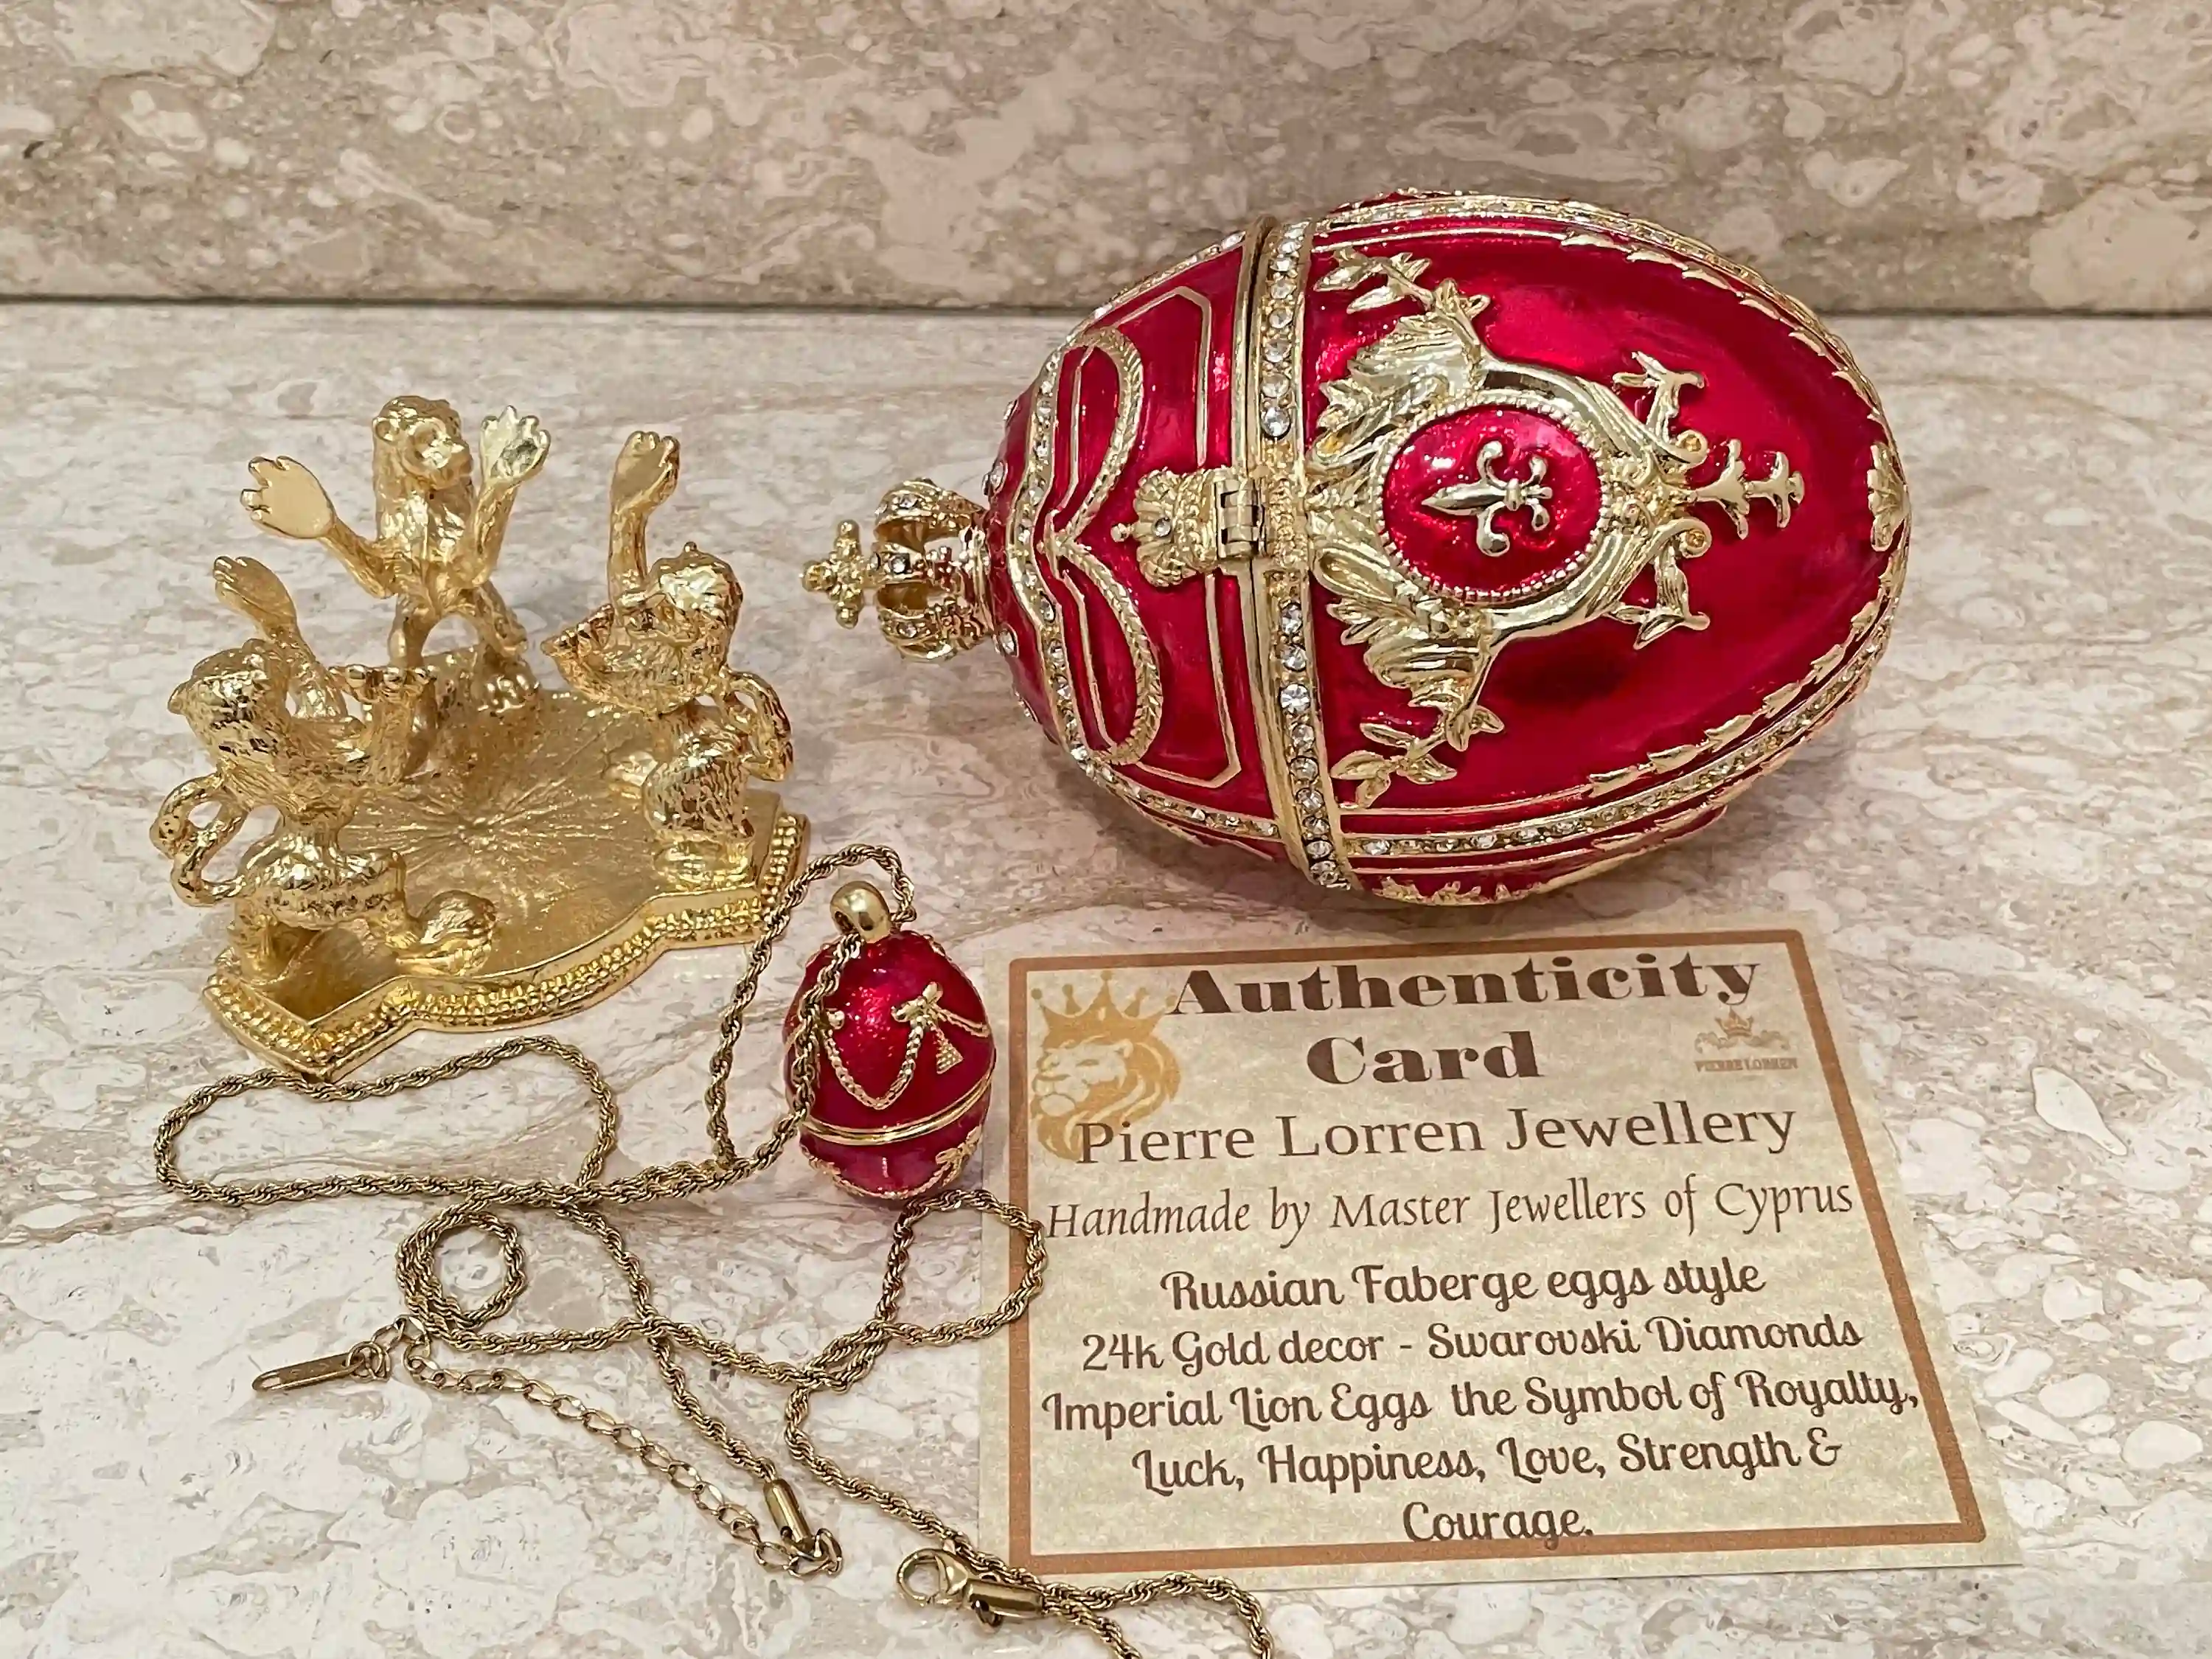 Fabrege Egg Style Enamel Egg Jewelry Box PLUS Faberge Egg Pendant Christmas Jewelry set 24k Gold 200 Austrian Crystal HANDMADE Birthday gift 